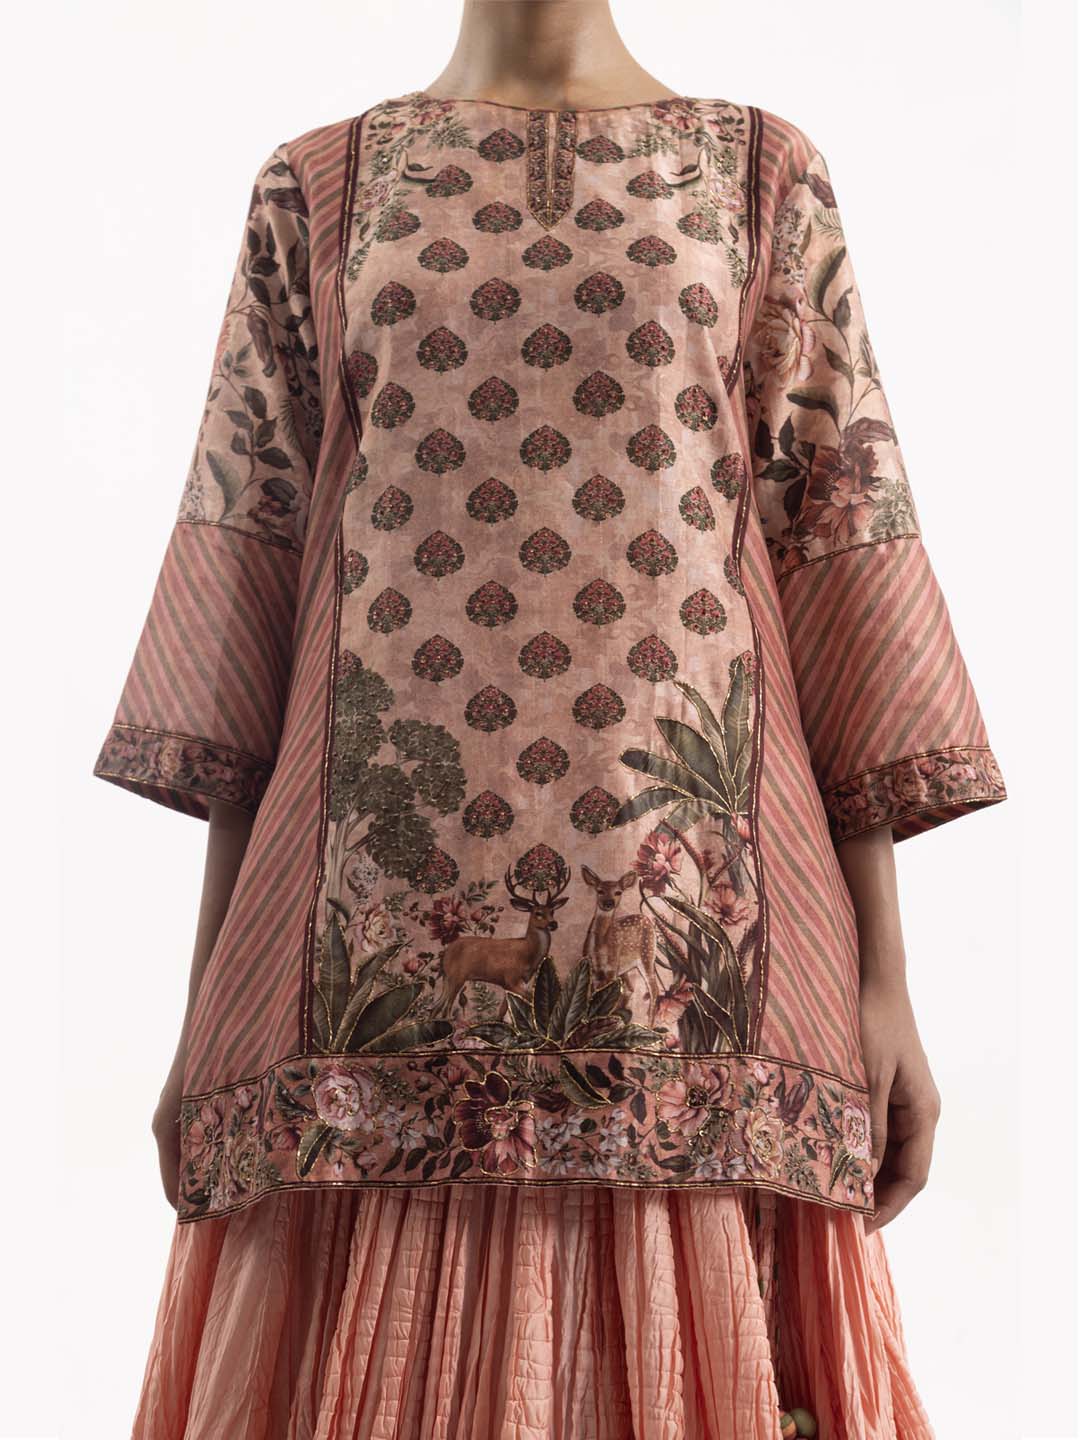 Long skirt paired with a digitally printed short kurta.